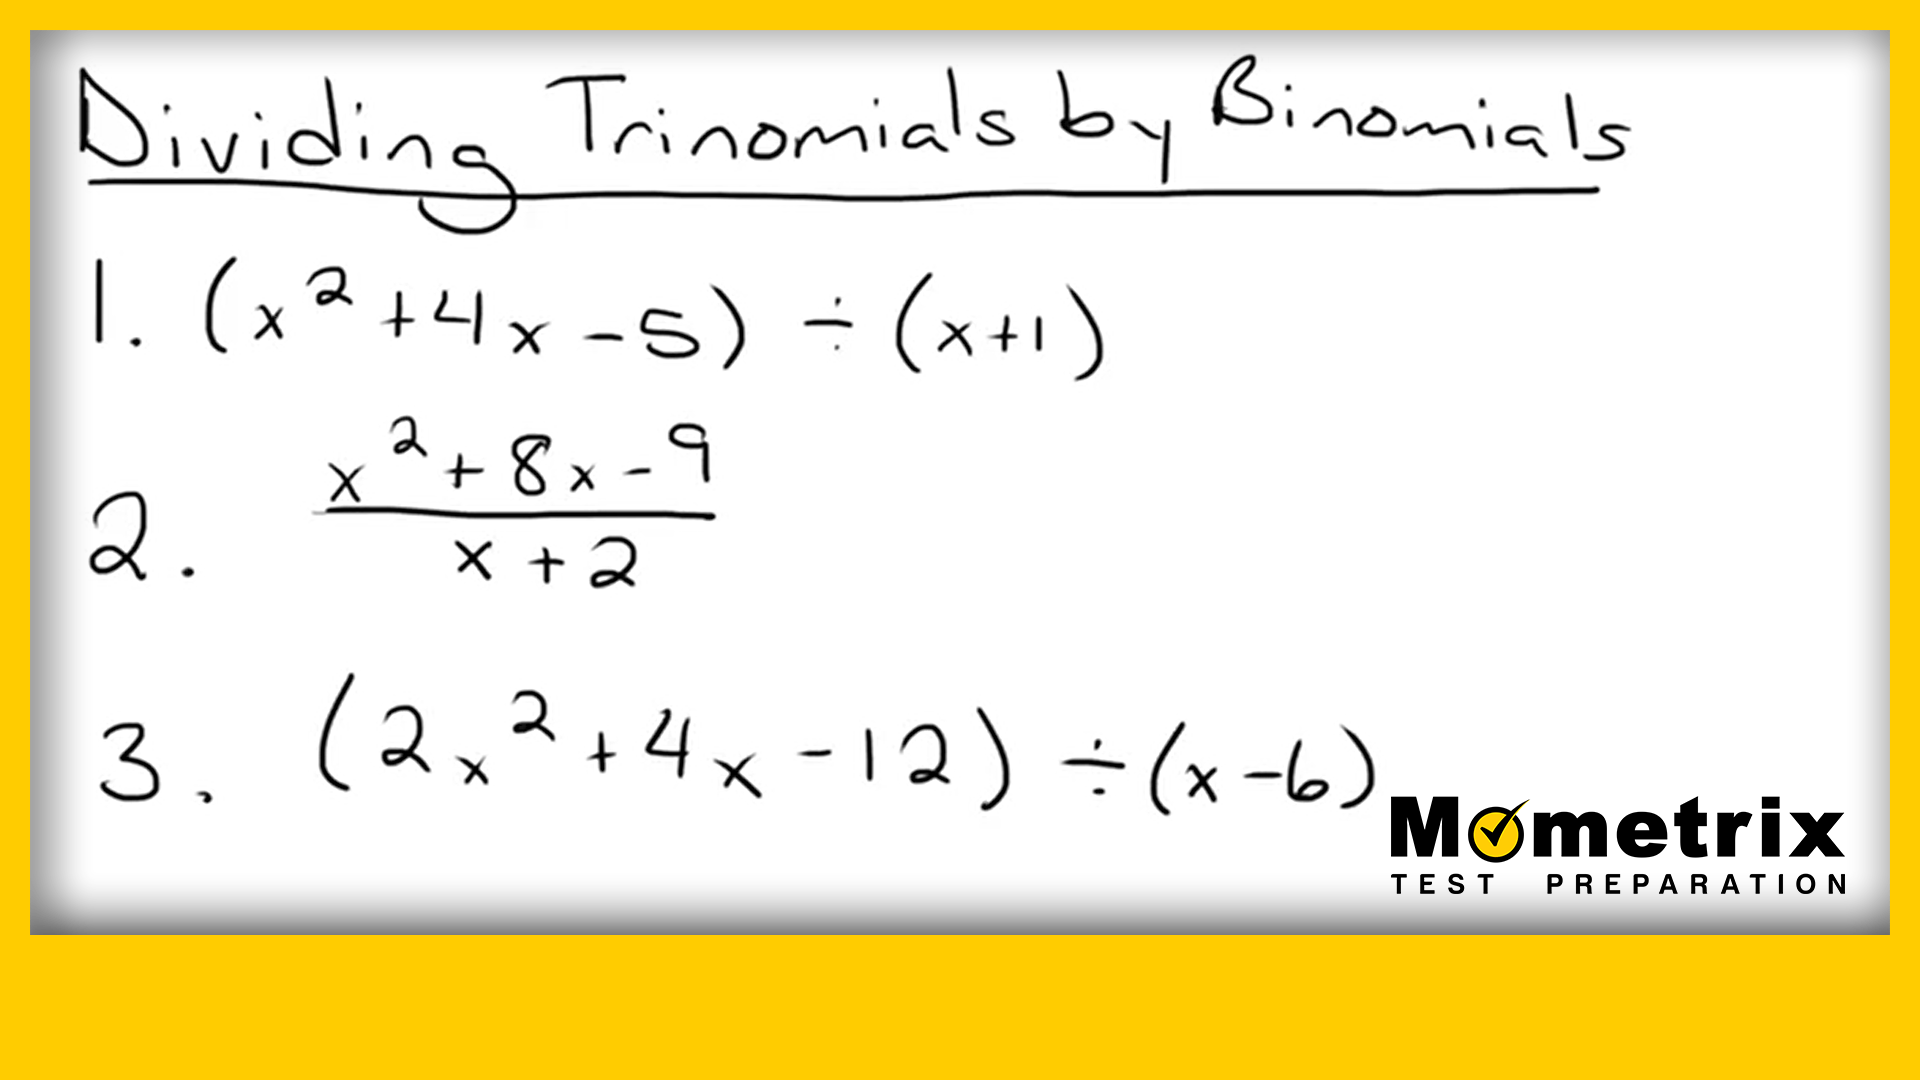 Dividing Trinomials By Binomials Pq Video 6821